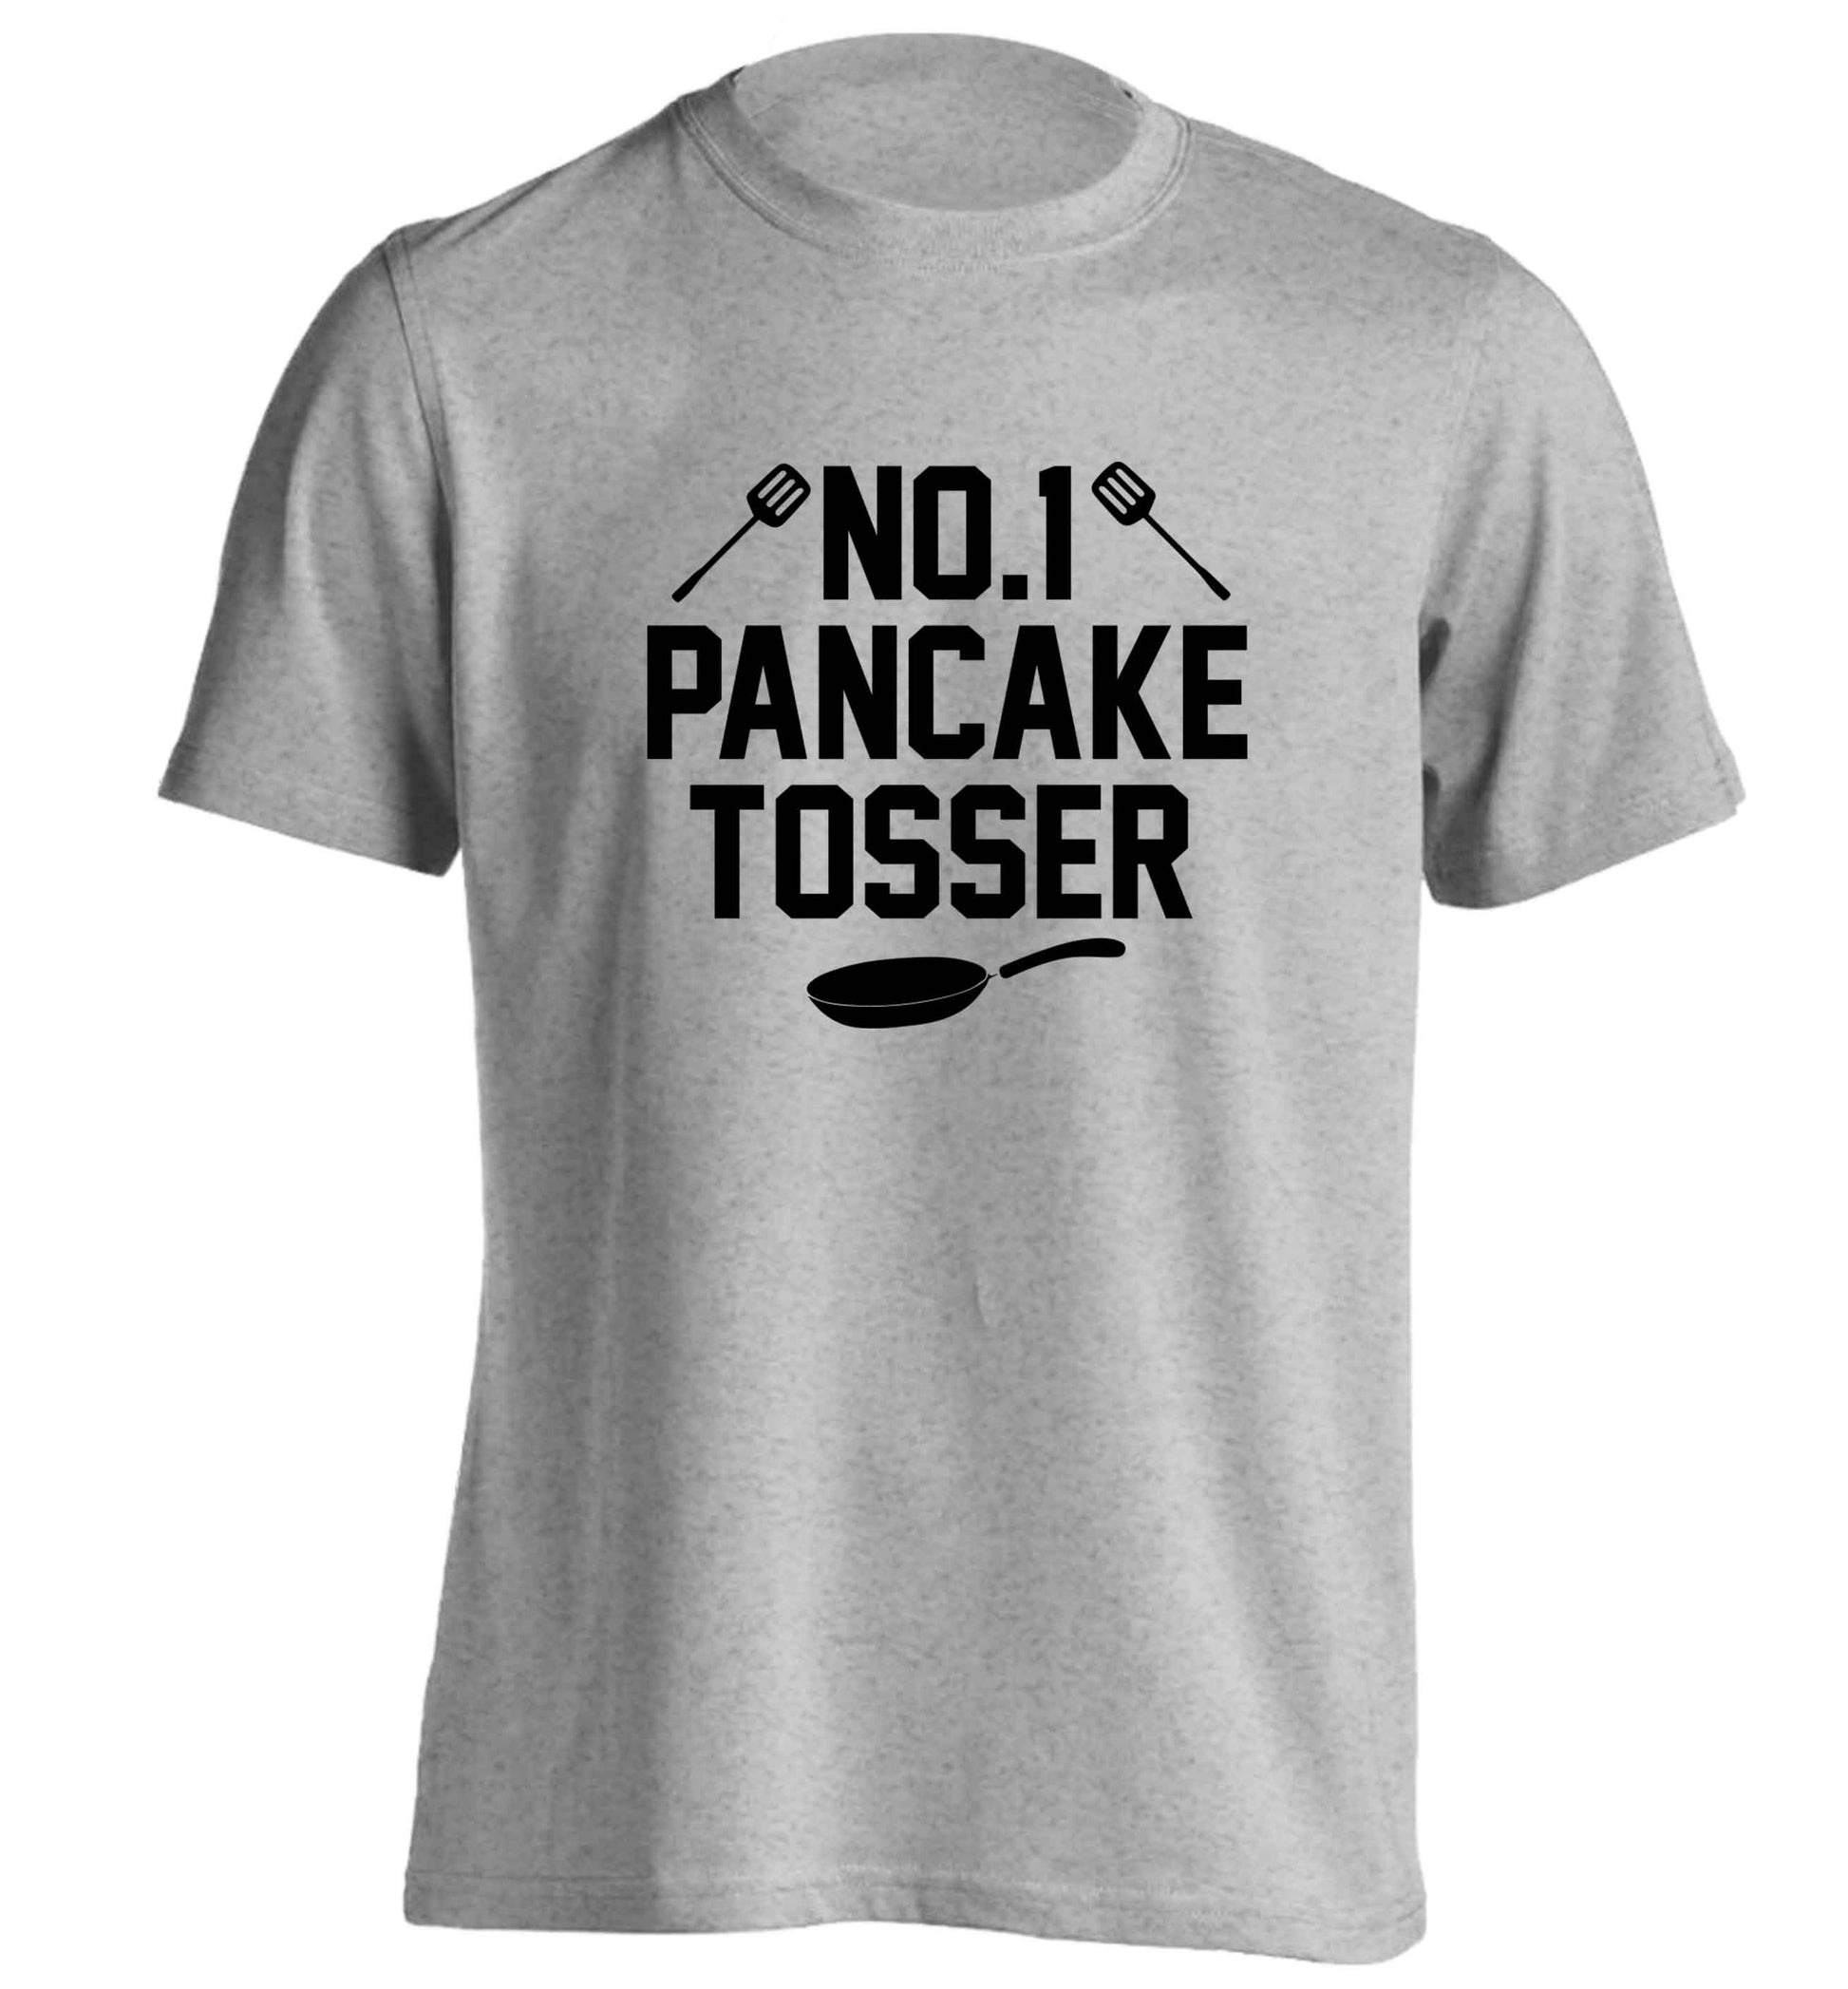 No.1 Pancake tosser adults unisex grey Tshirt 2XL